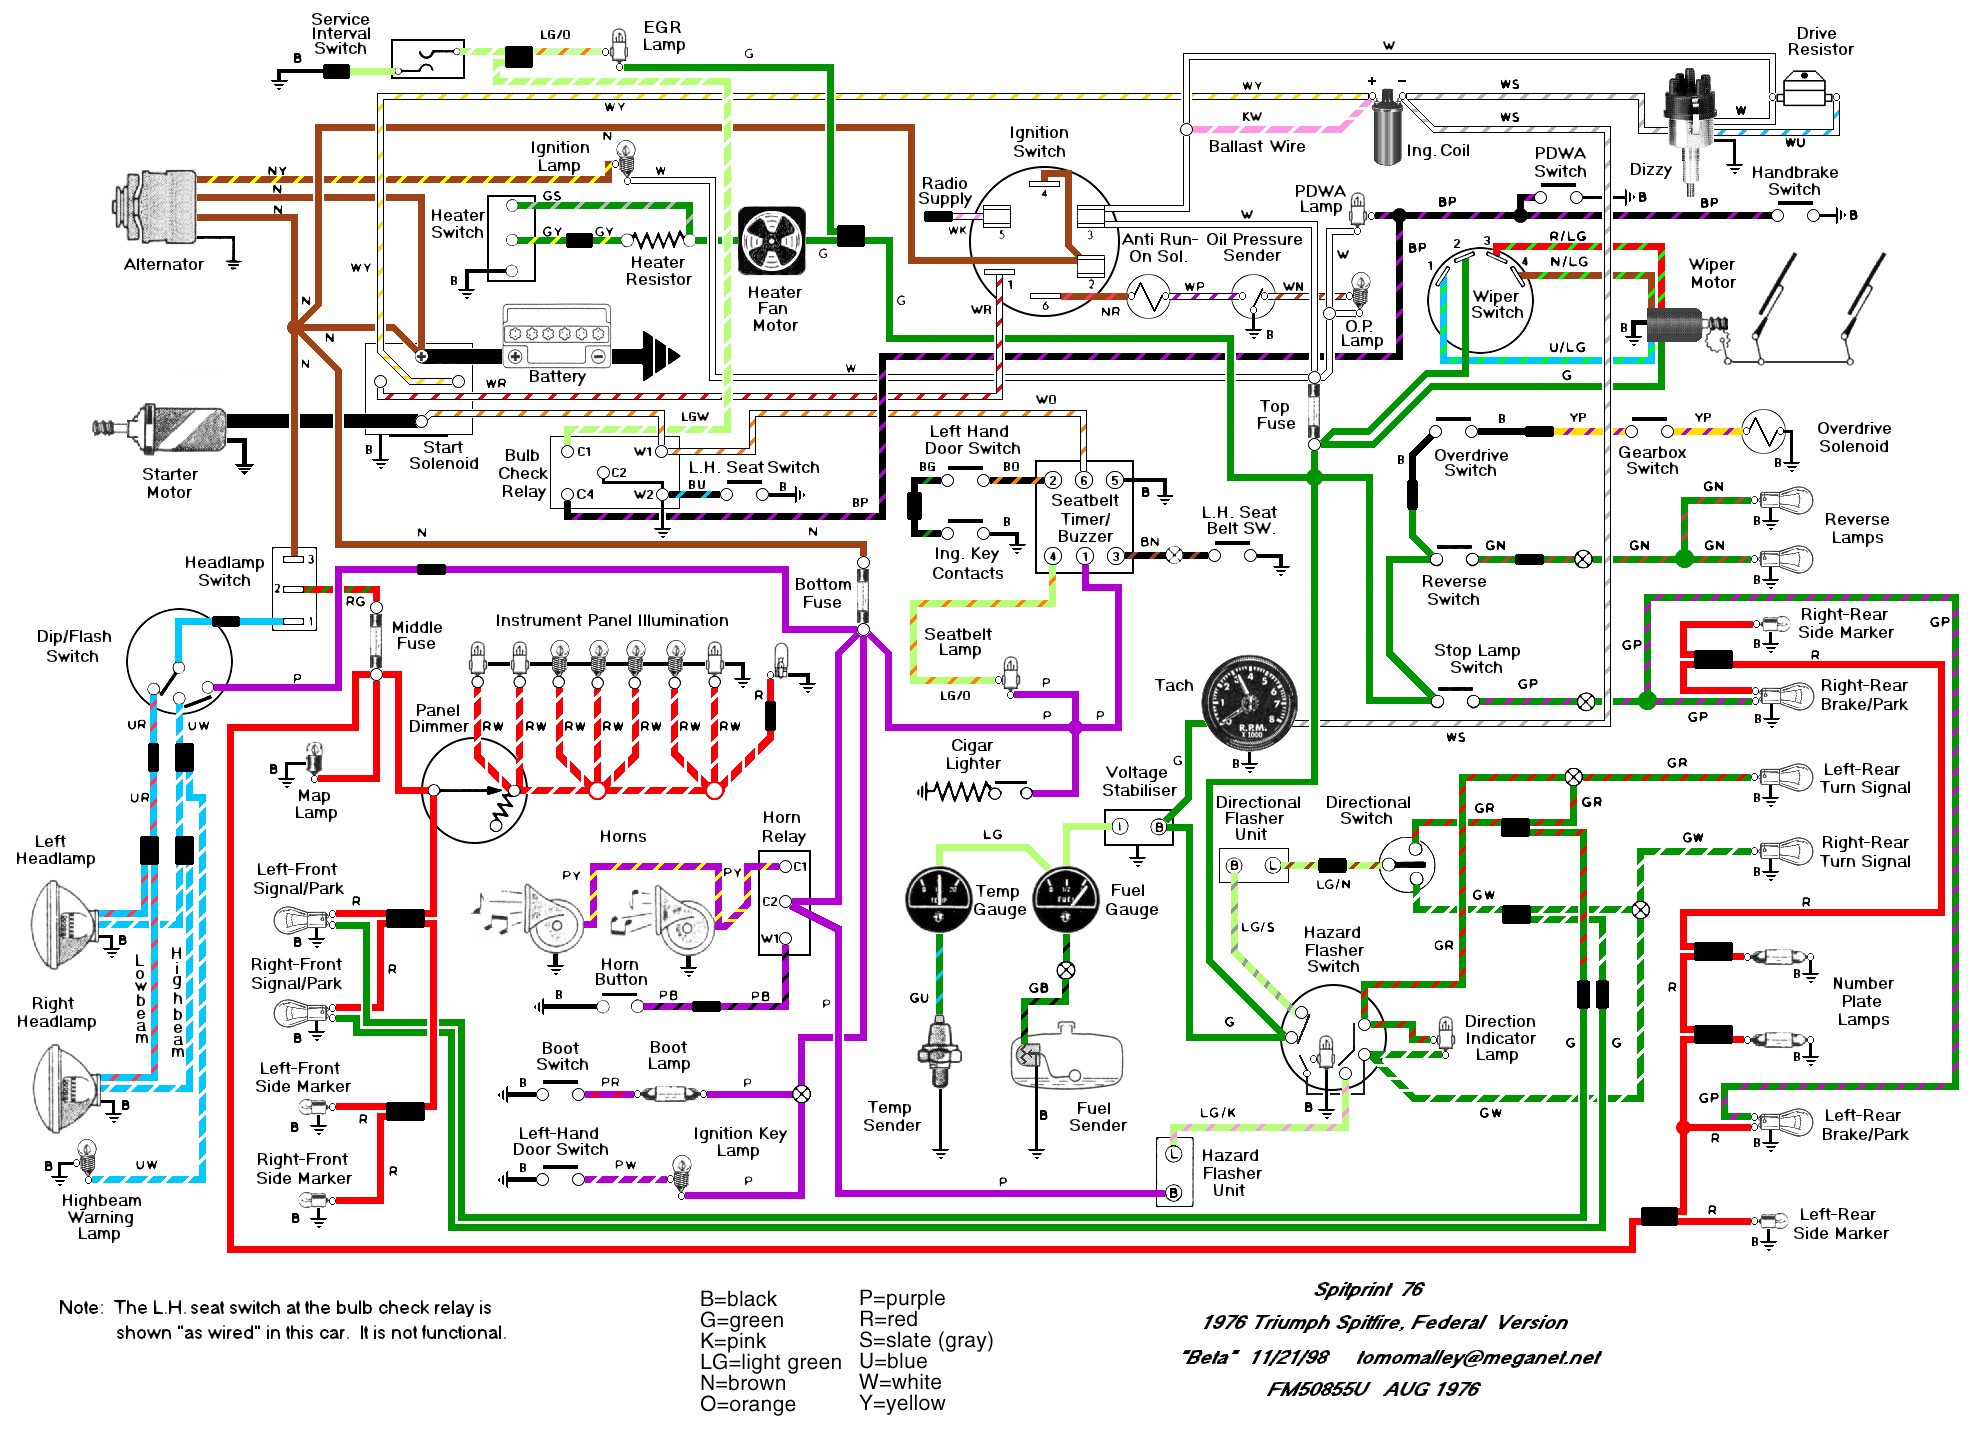 electrical wiring diagram house electrical wiring diagram symbols rh golro